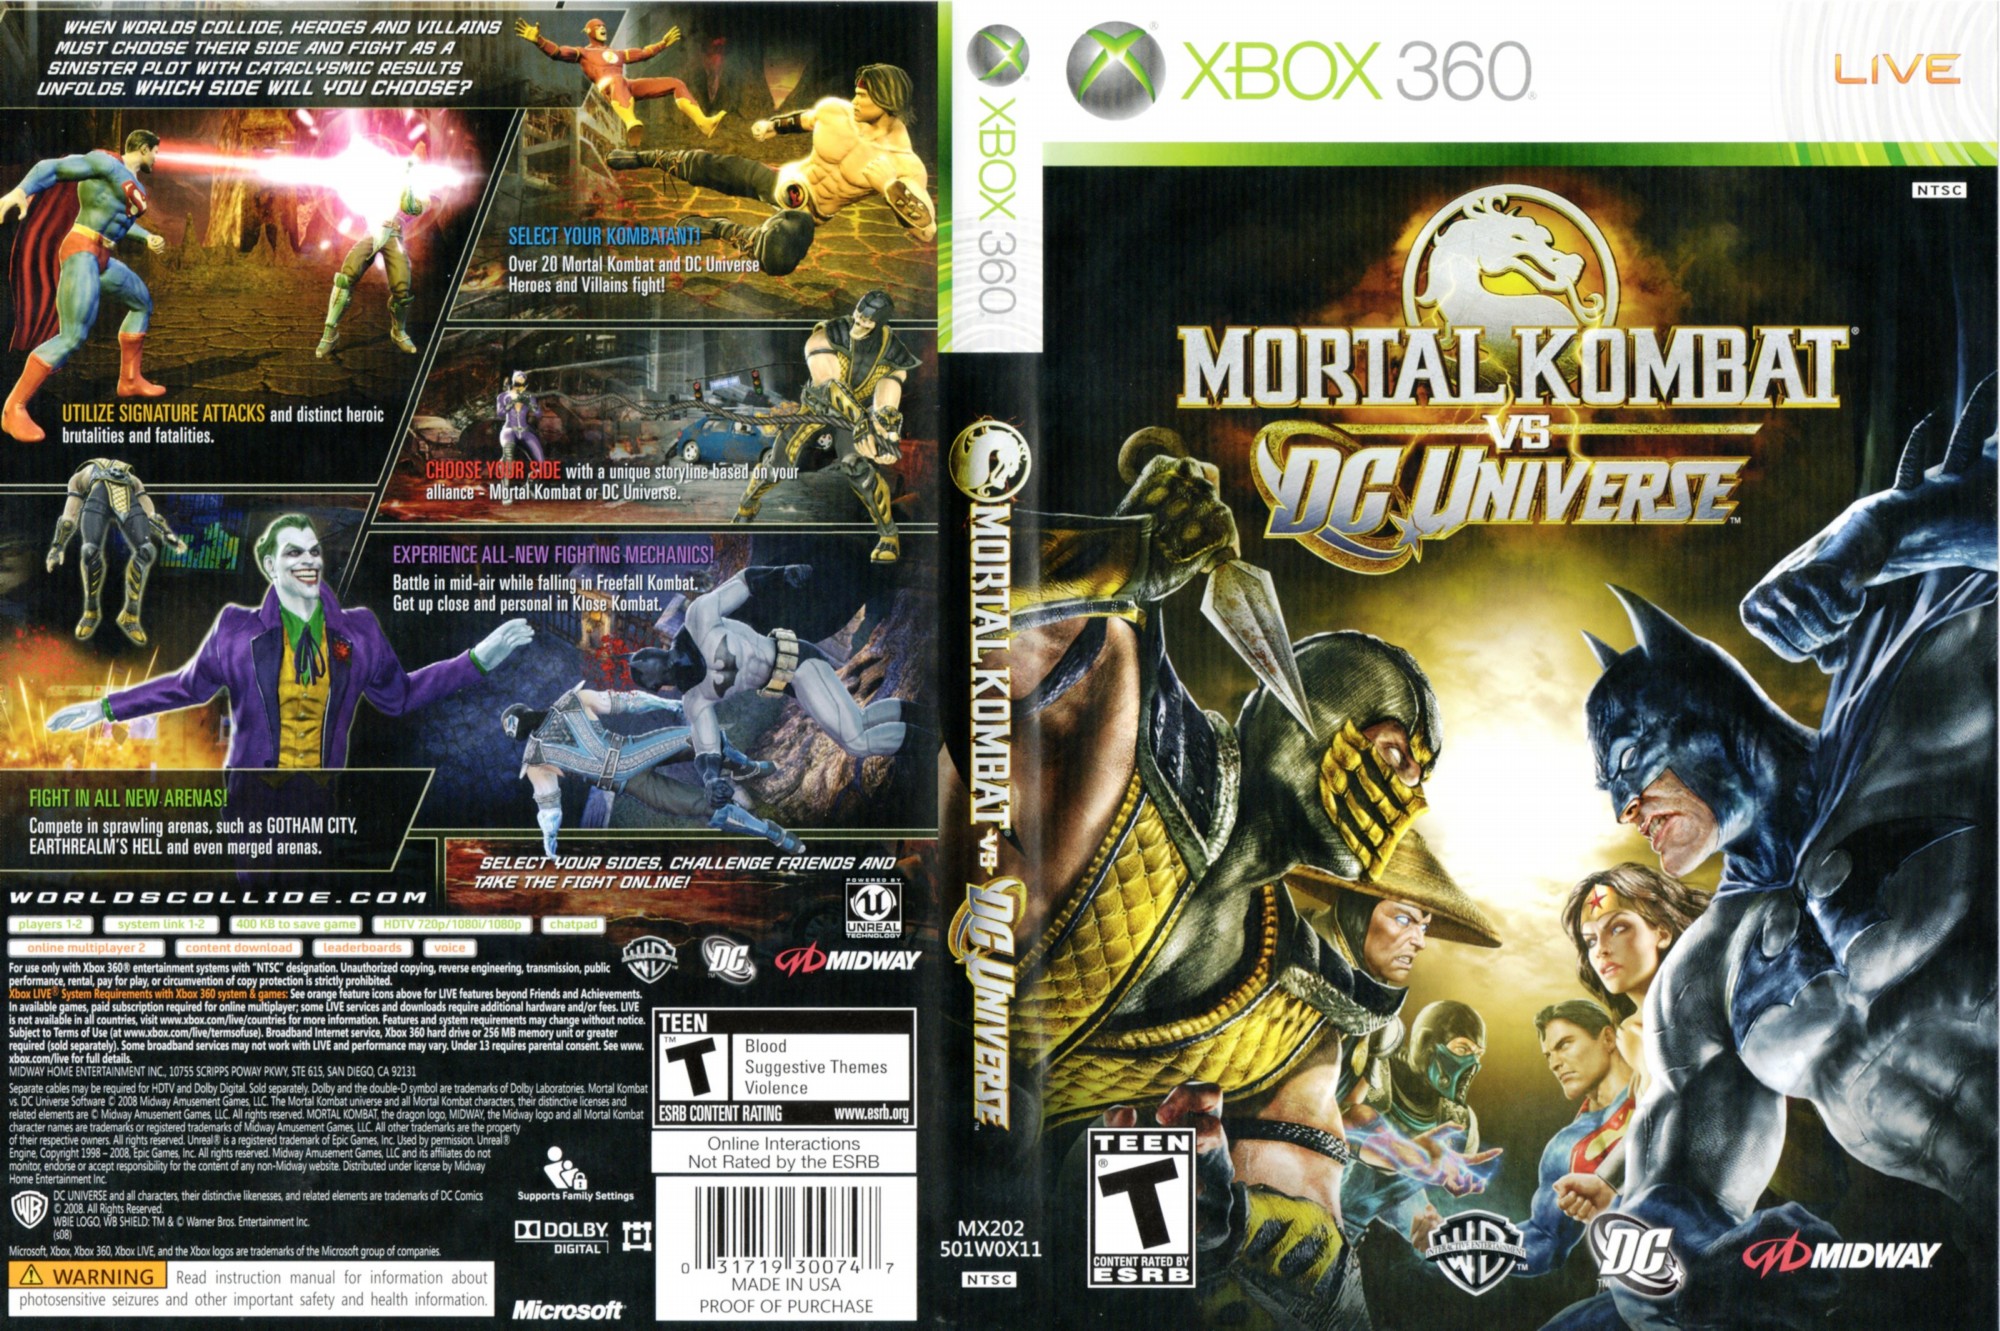 Mortal Kombat Vs. DC Universe #19